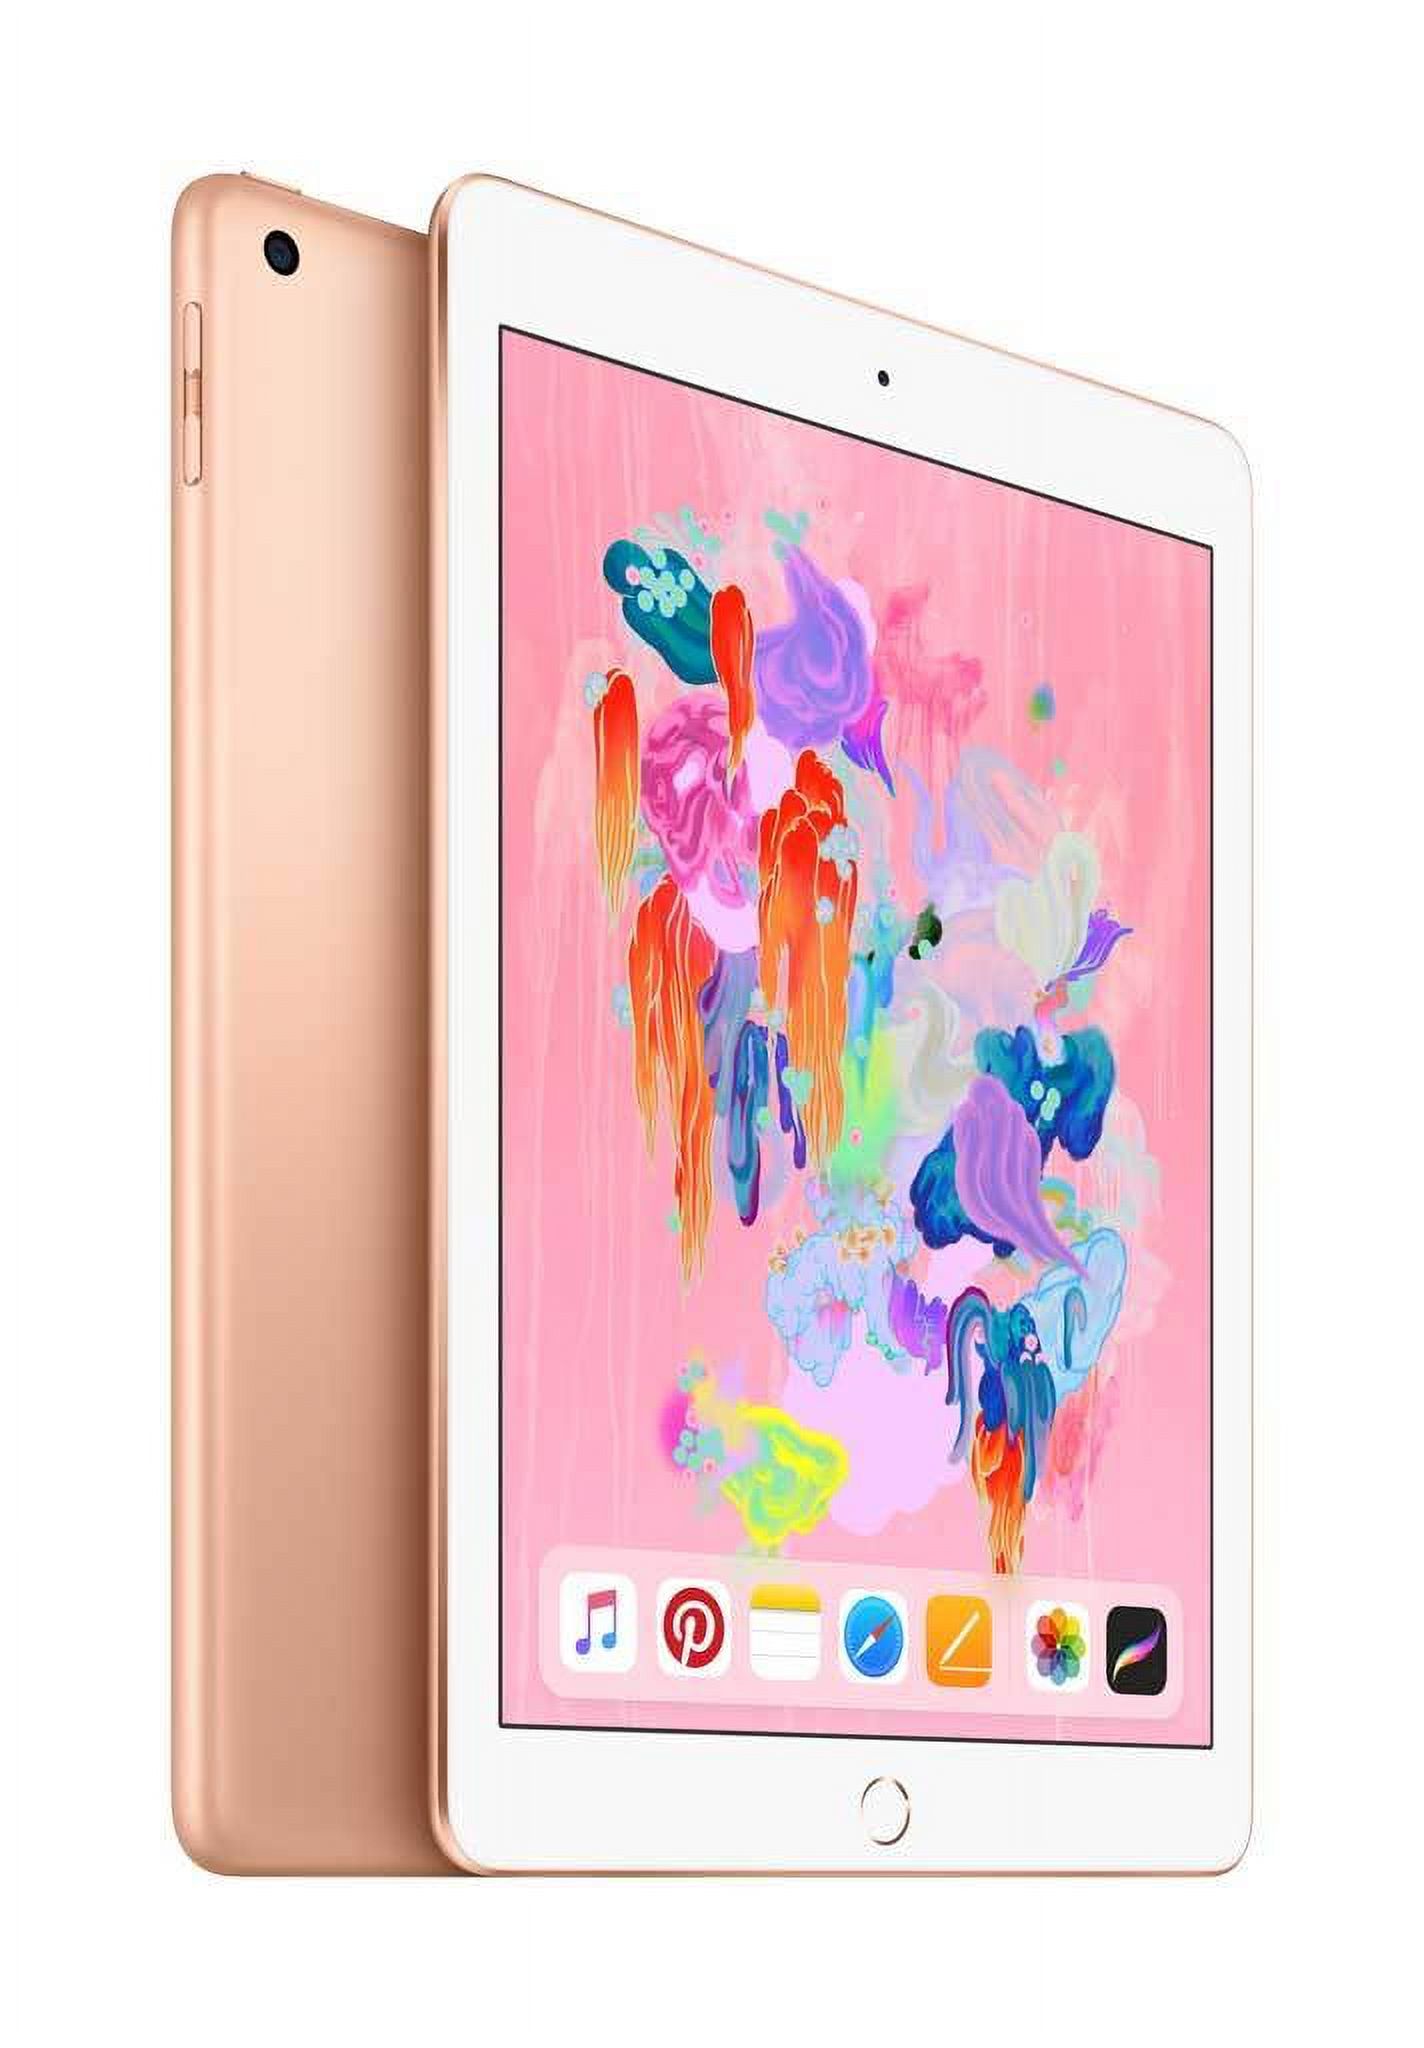 Apple iPad (6th Gen) 32GB Wi-Fi - Gold - image 1 of 5